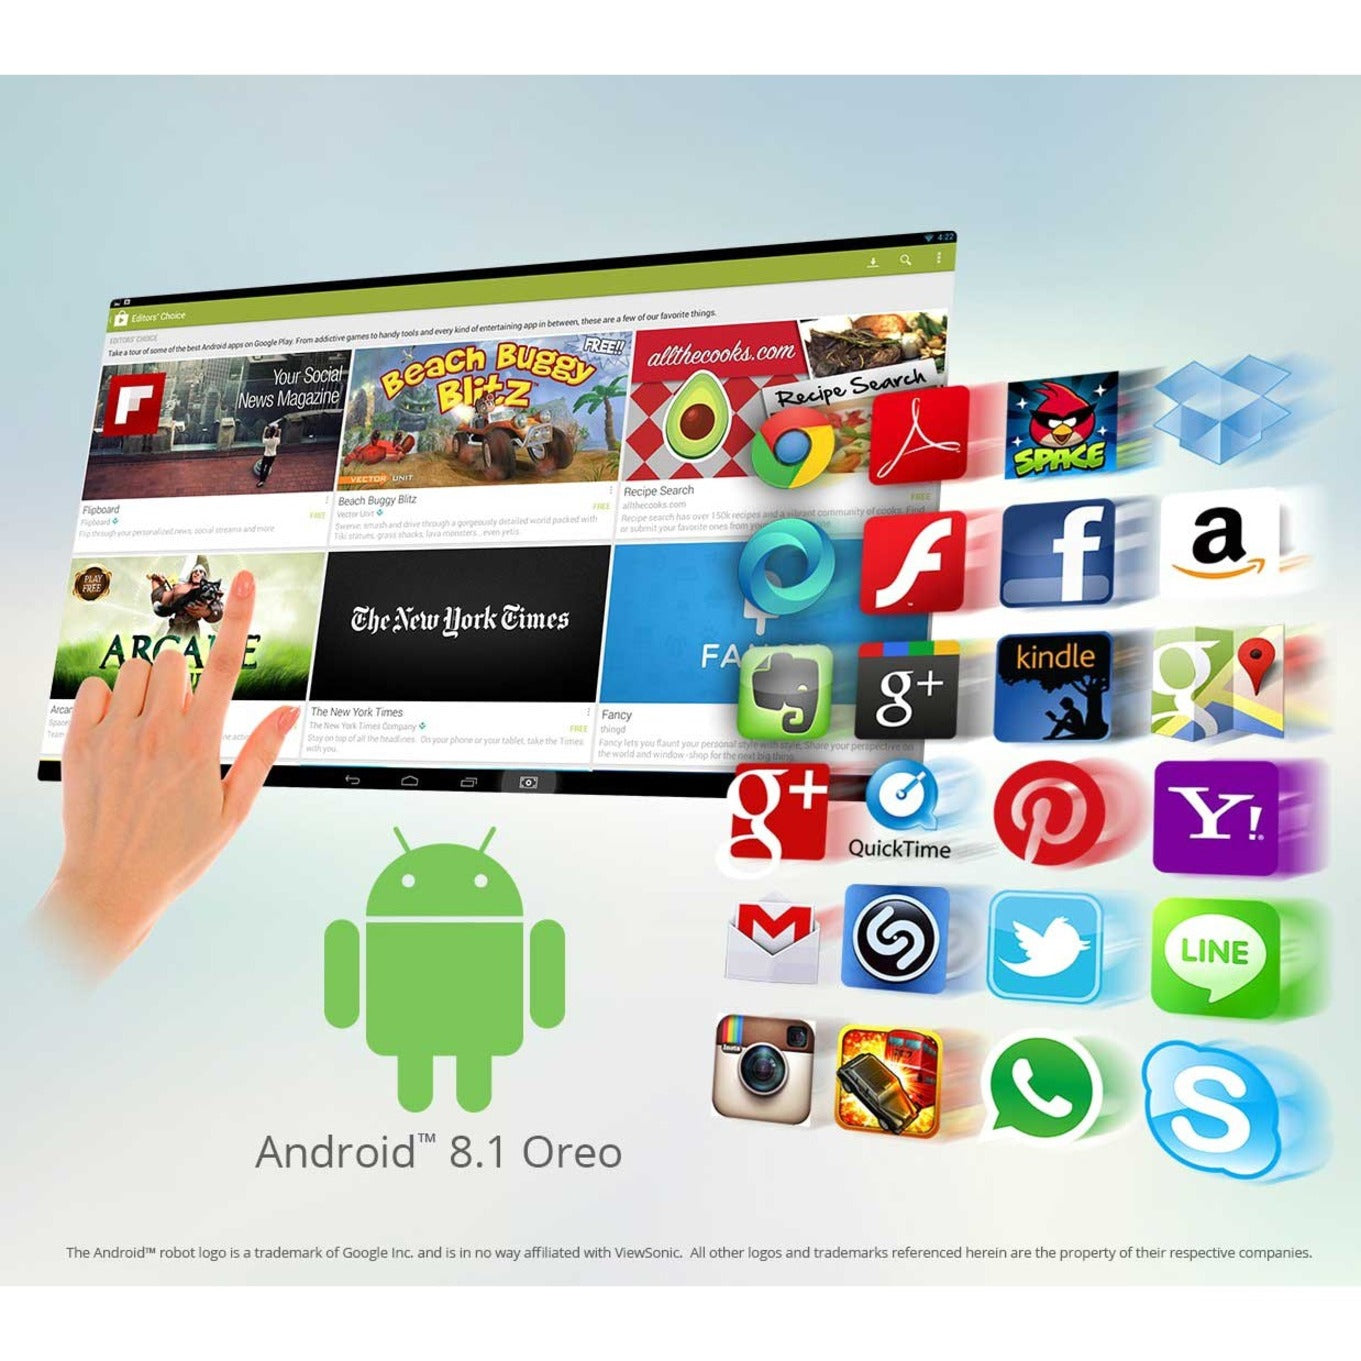 ViewSonic VSD243-BKA-US0 VSD243 Digital Signage Display, 24" Touchscreen, Android 8.1 Oreo, 3 Year Warranty